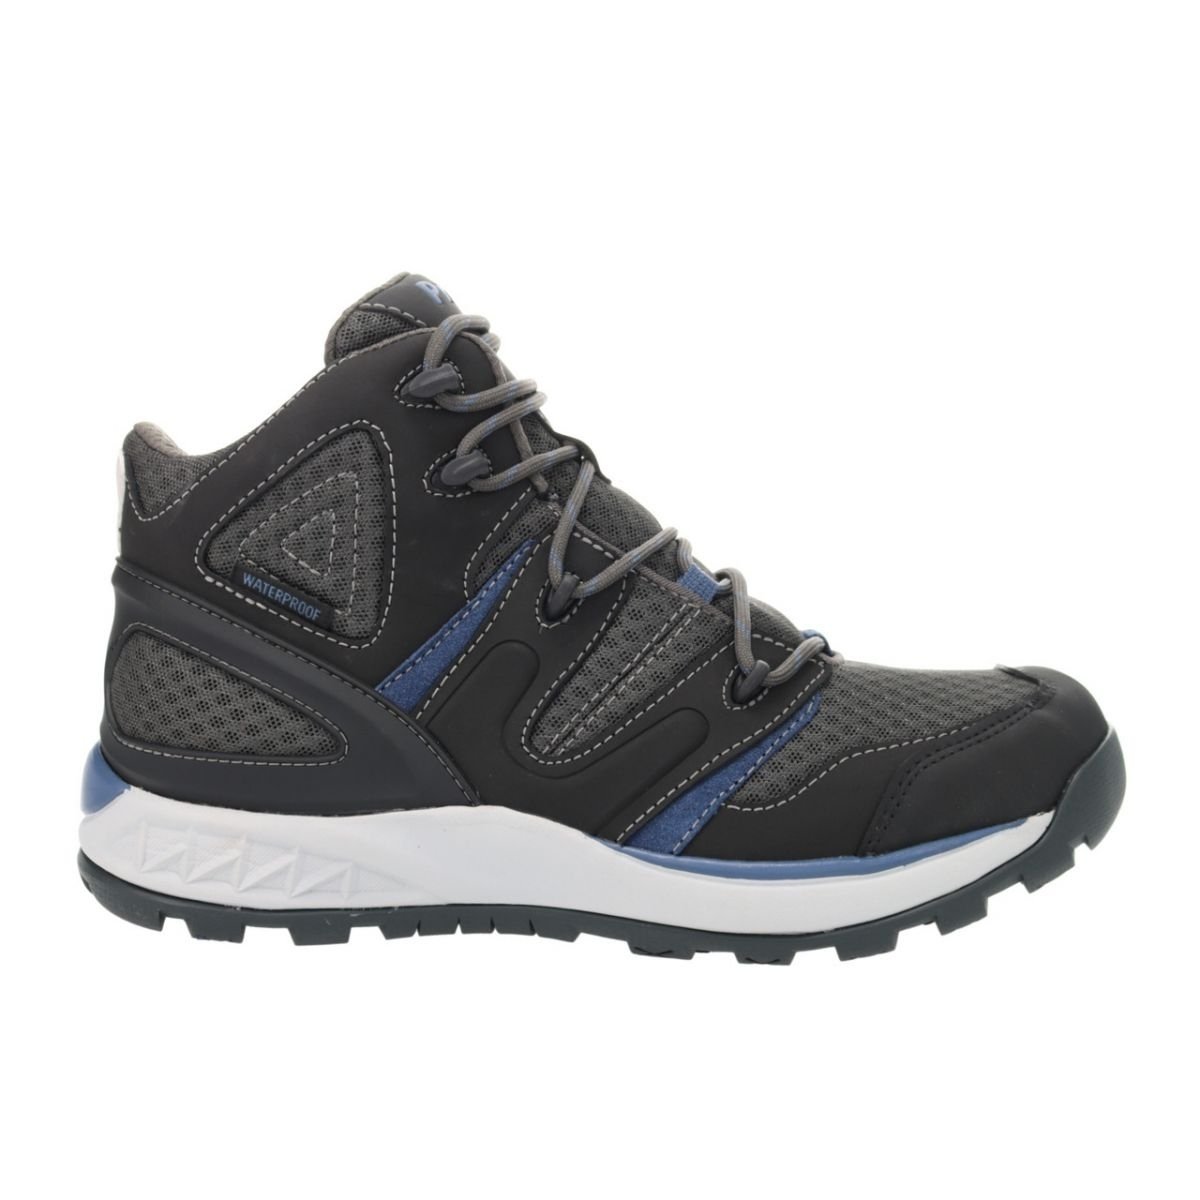 Propet Men's Veymont Waterproof Hiking Boot Grey/Blue - MOA022SGRB GREY/BLUE - GREY/BLUE, 14 X-Wide